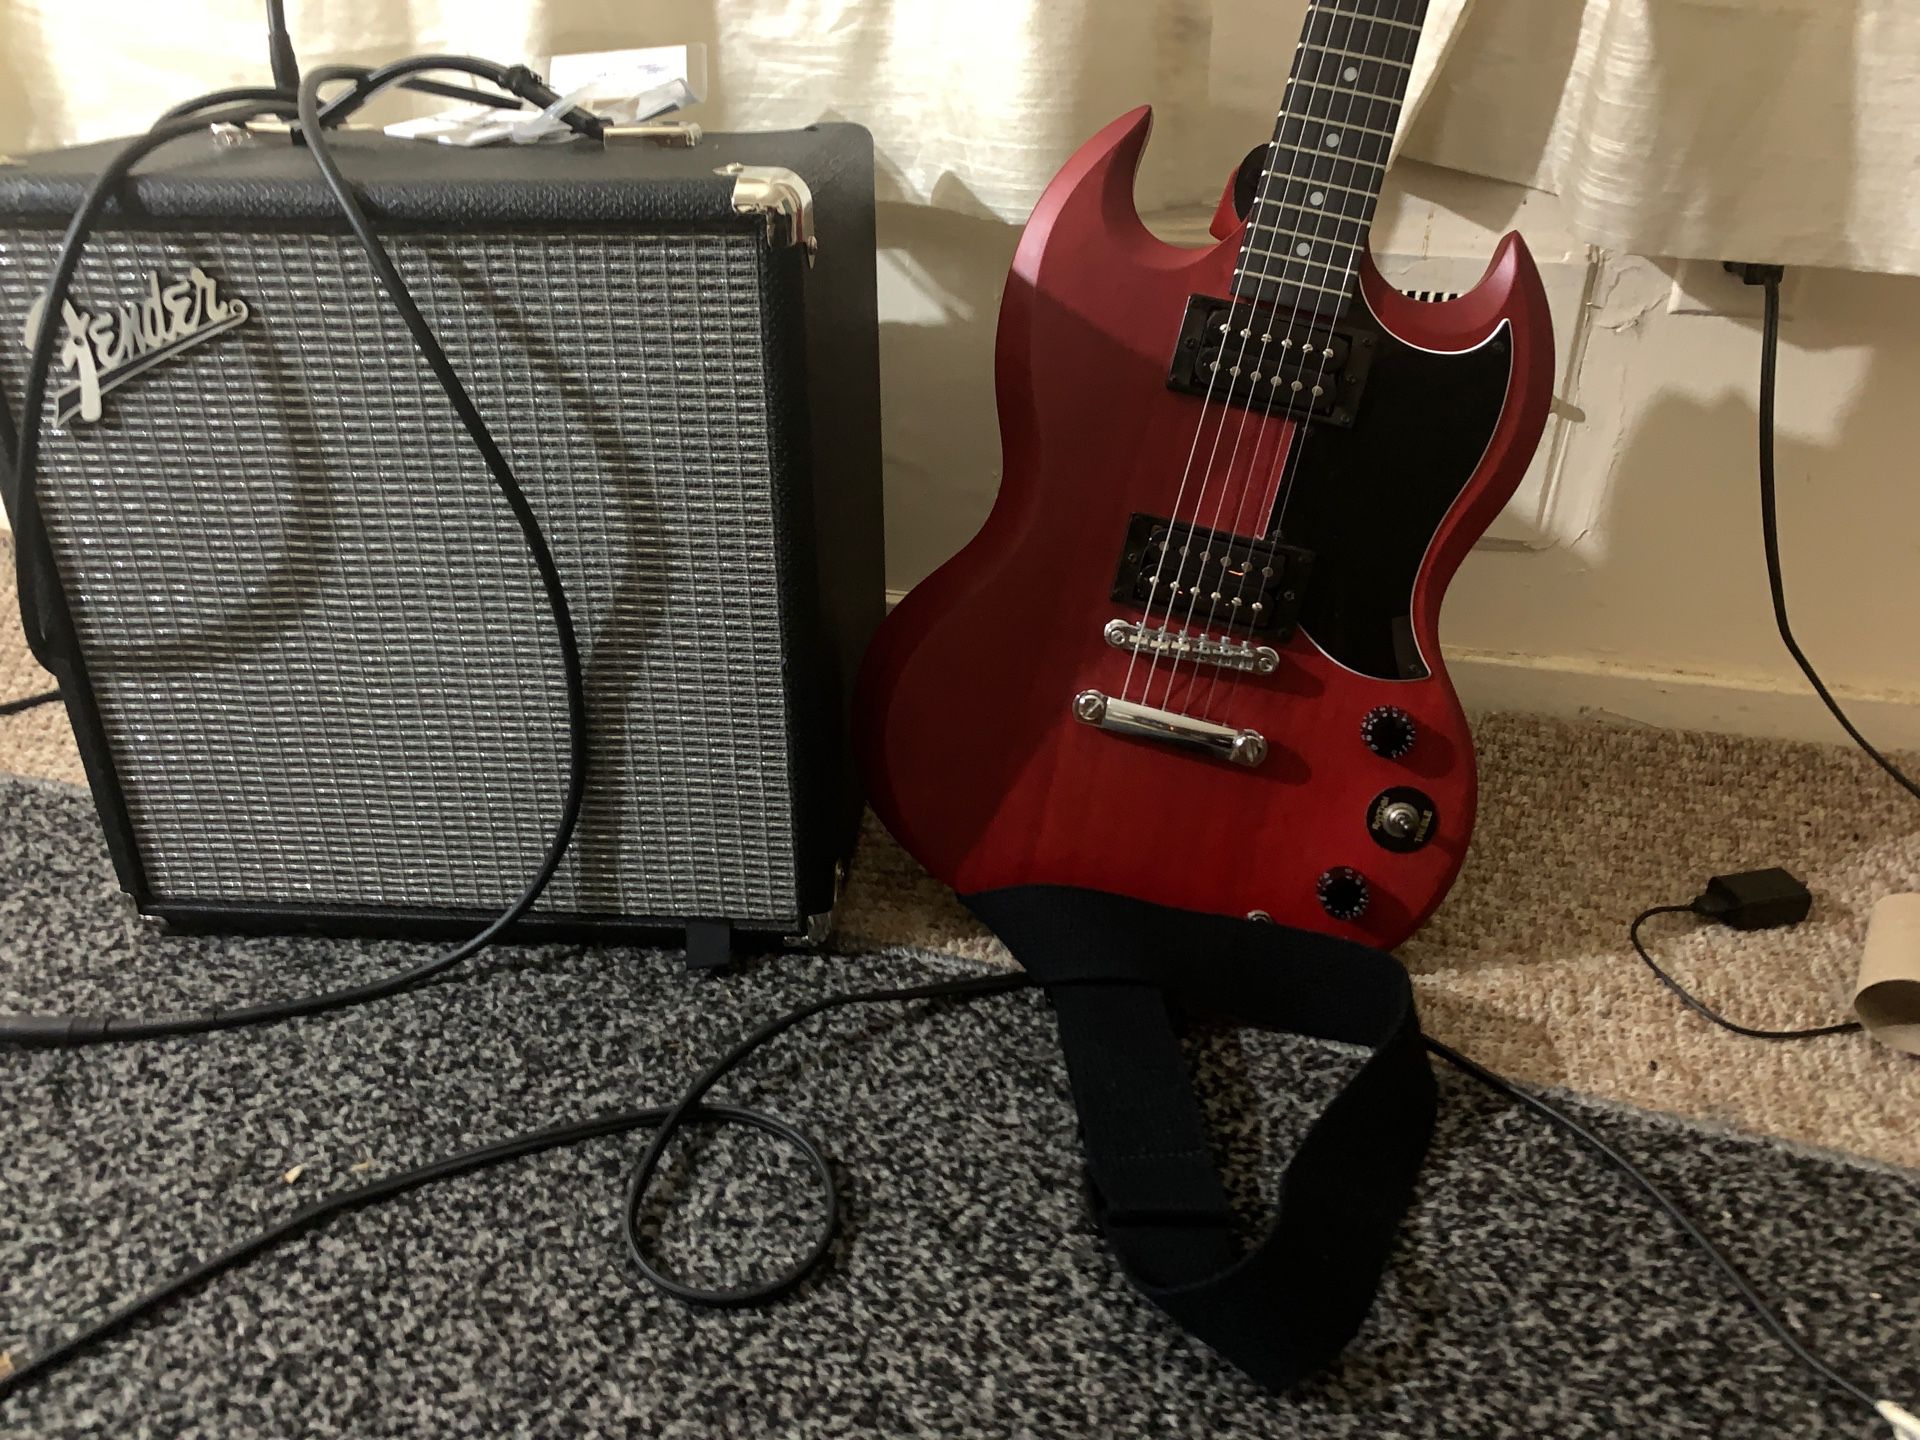 Yamaha guitar and amp